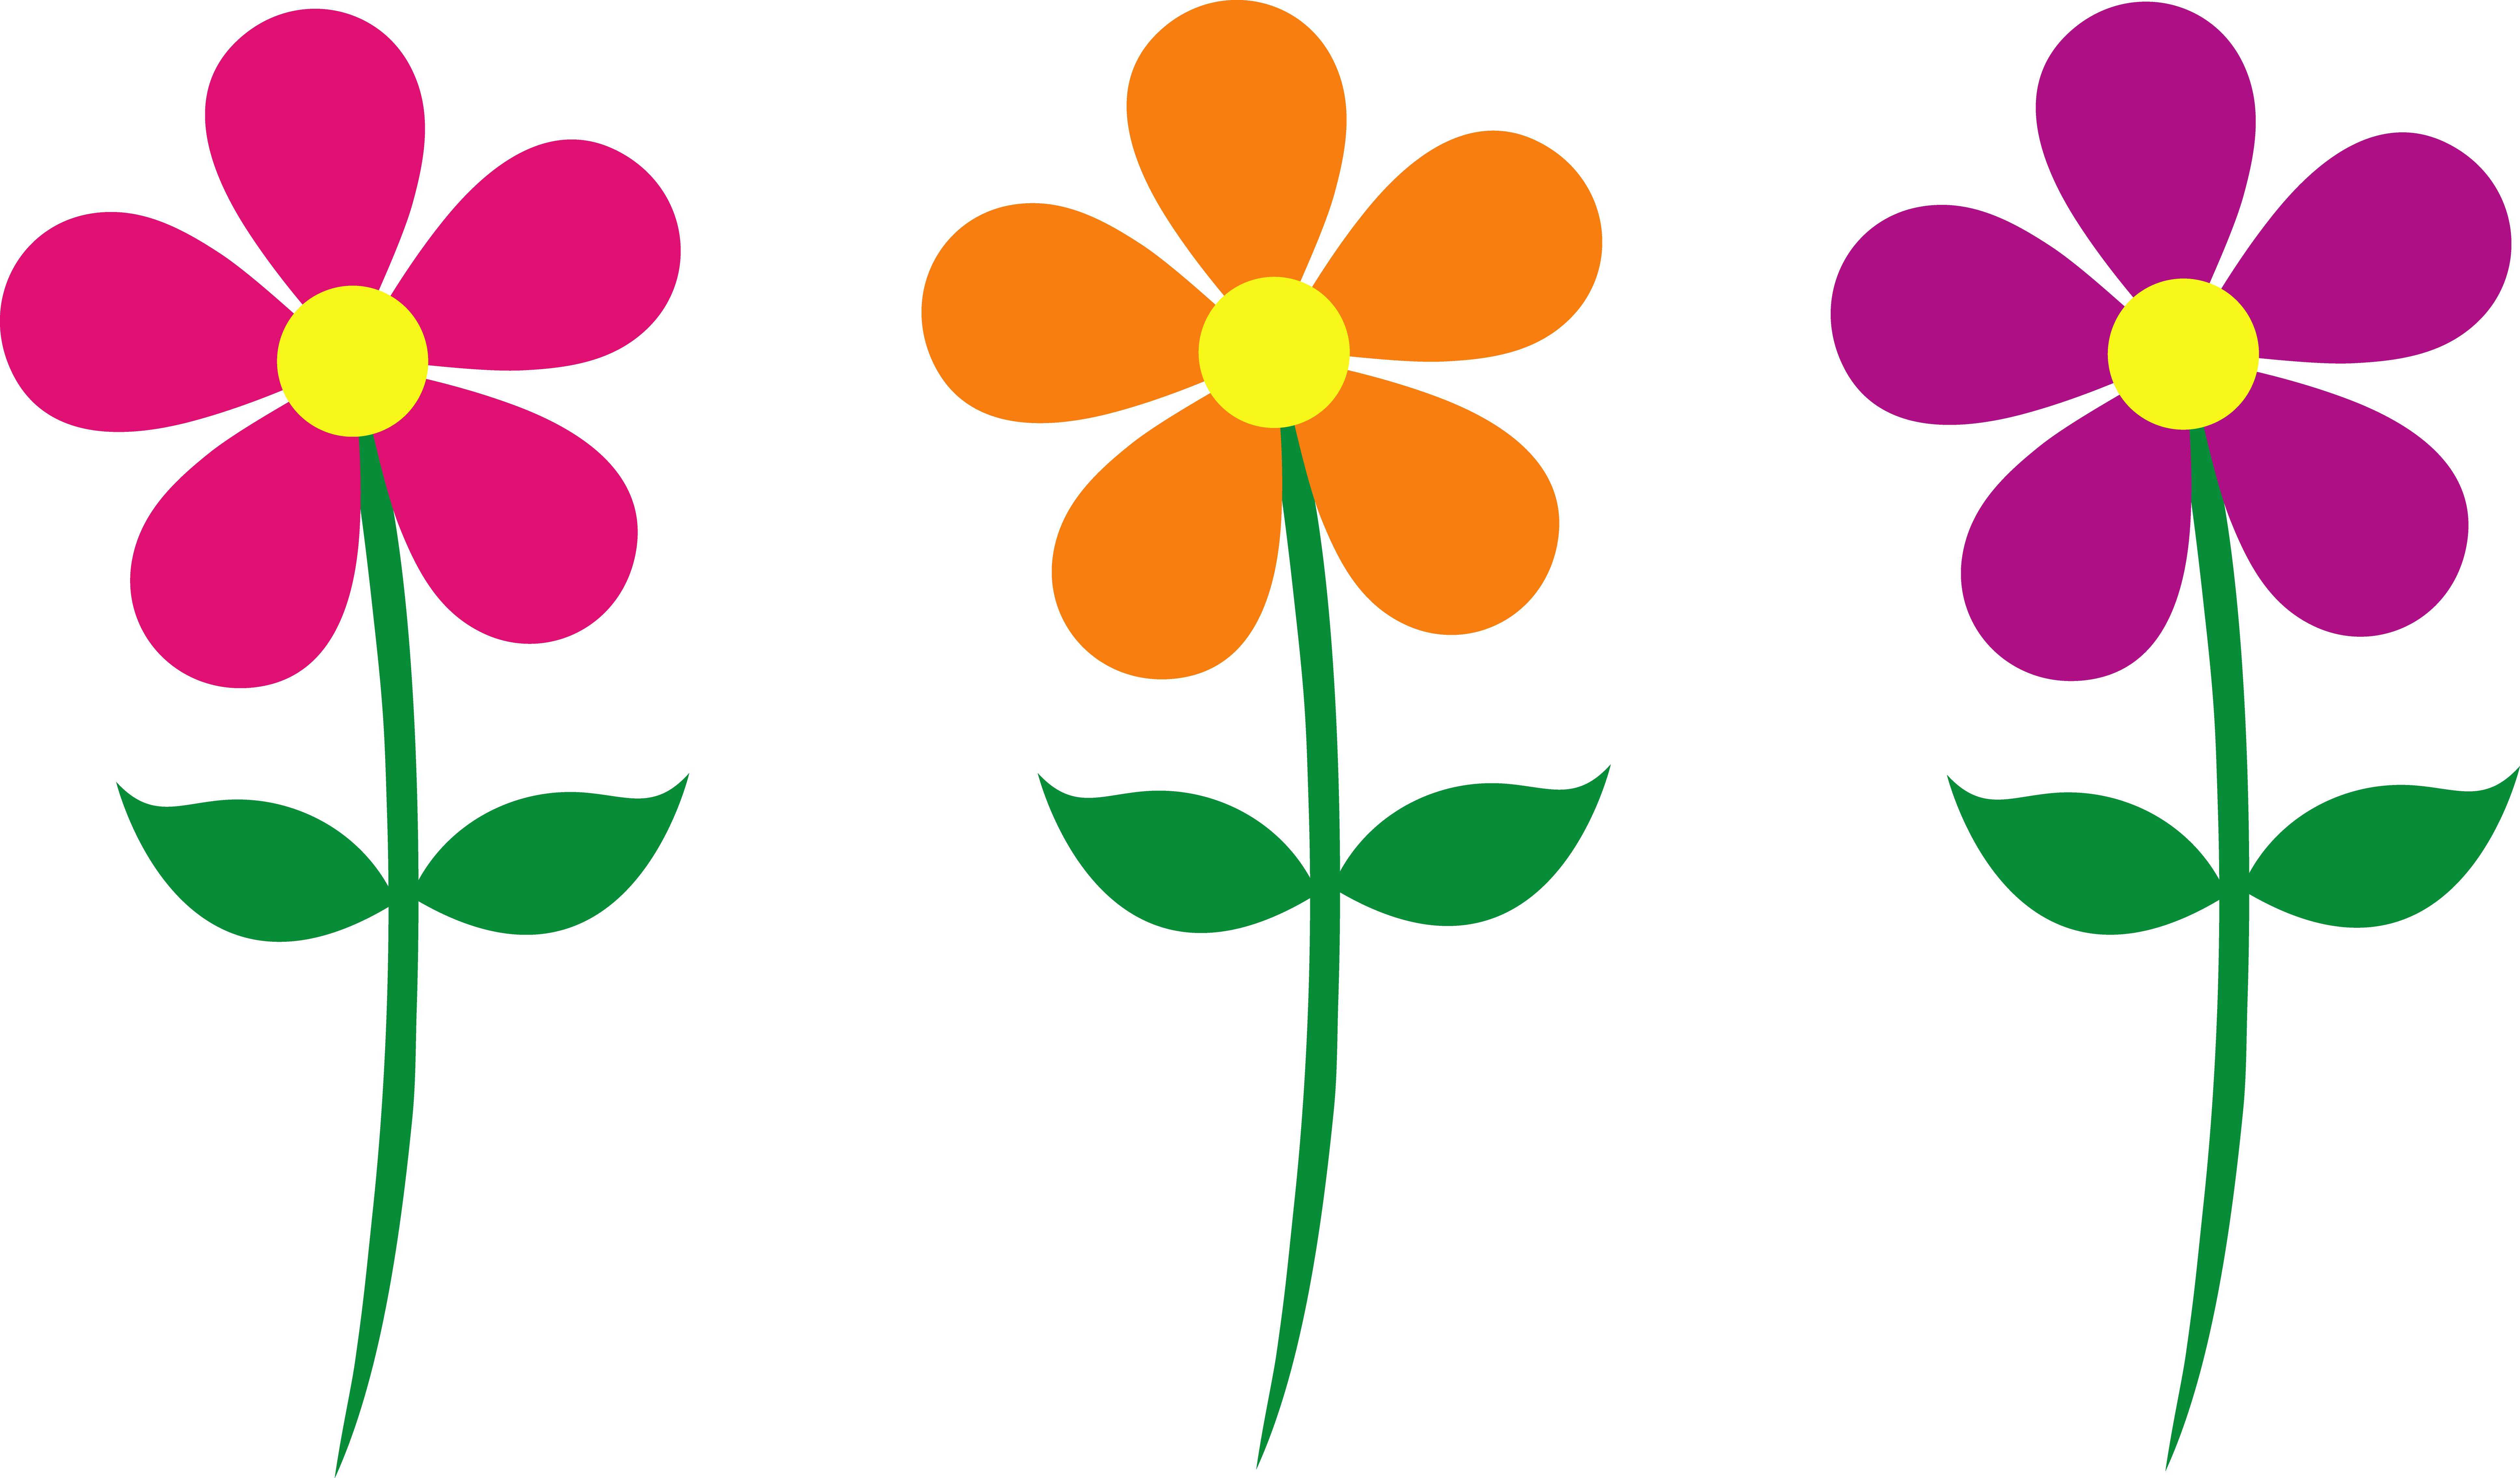 Free Clipart Spring Flowers - Tumundografico